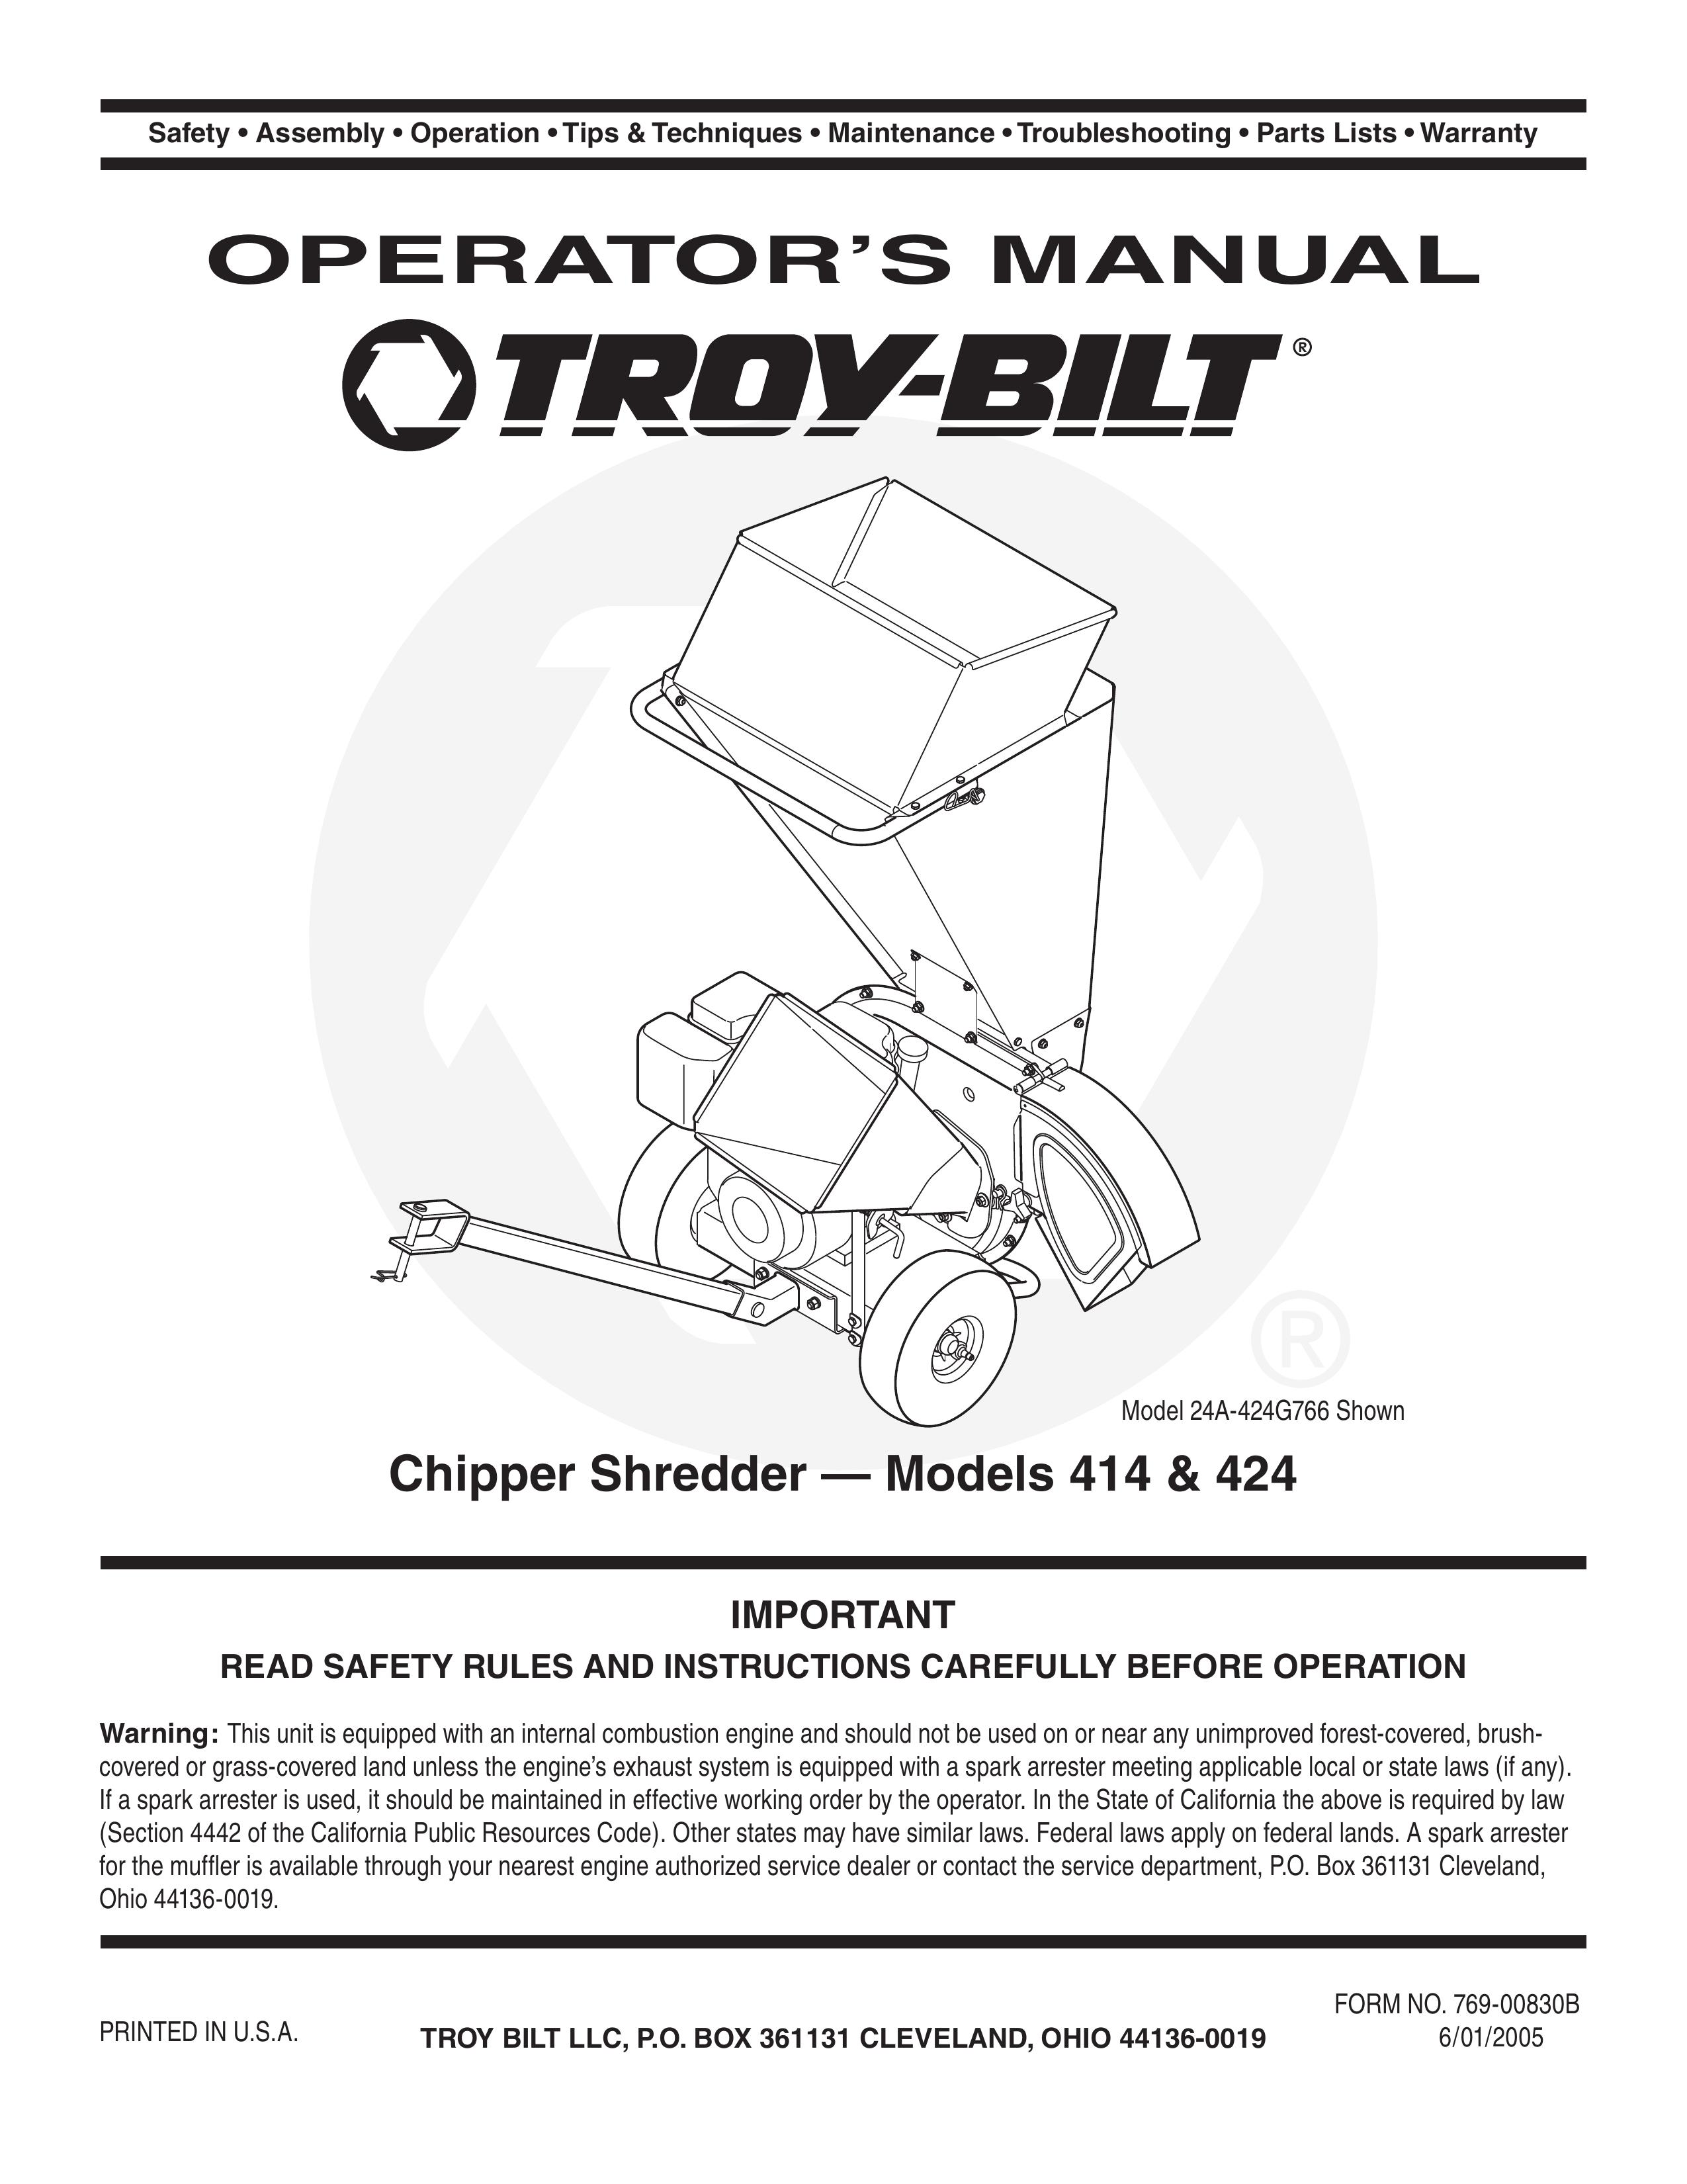 Troy-Bilt 424 Chipper User Manual